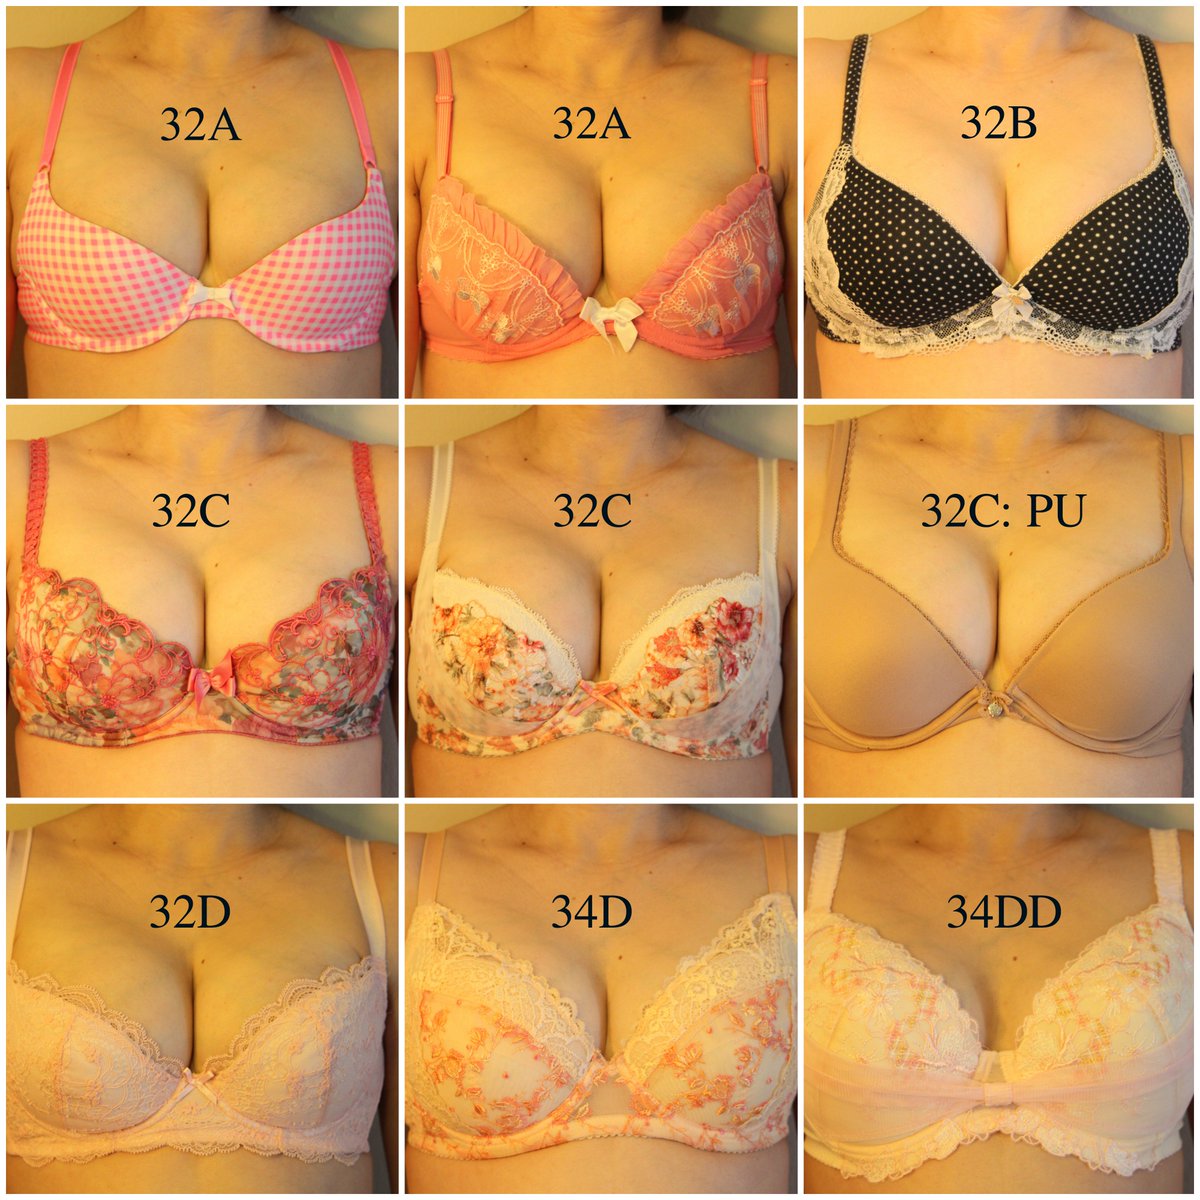 32c breasts 